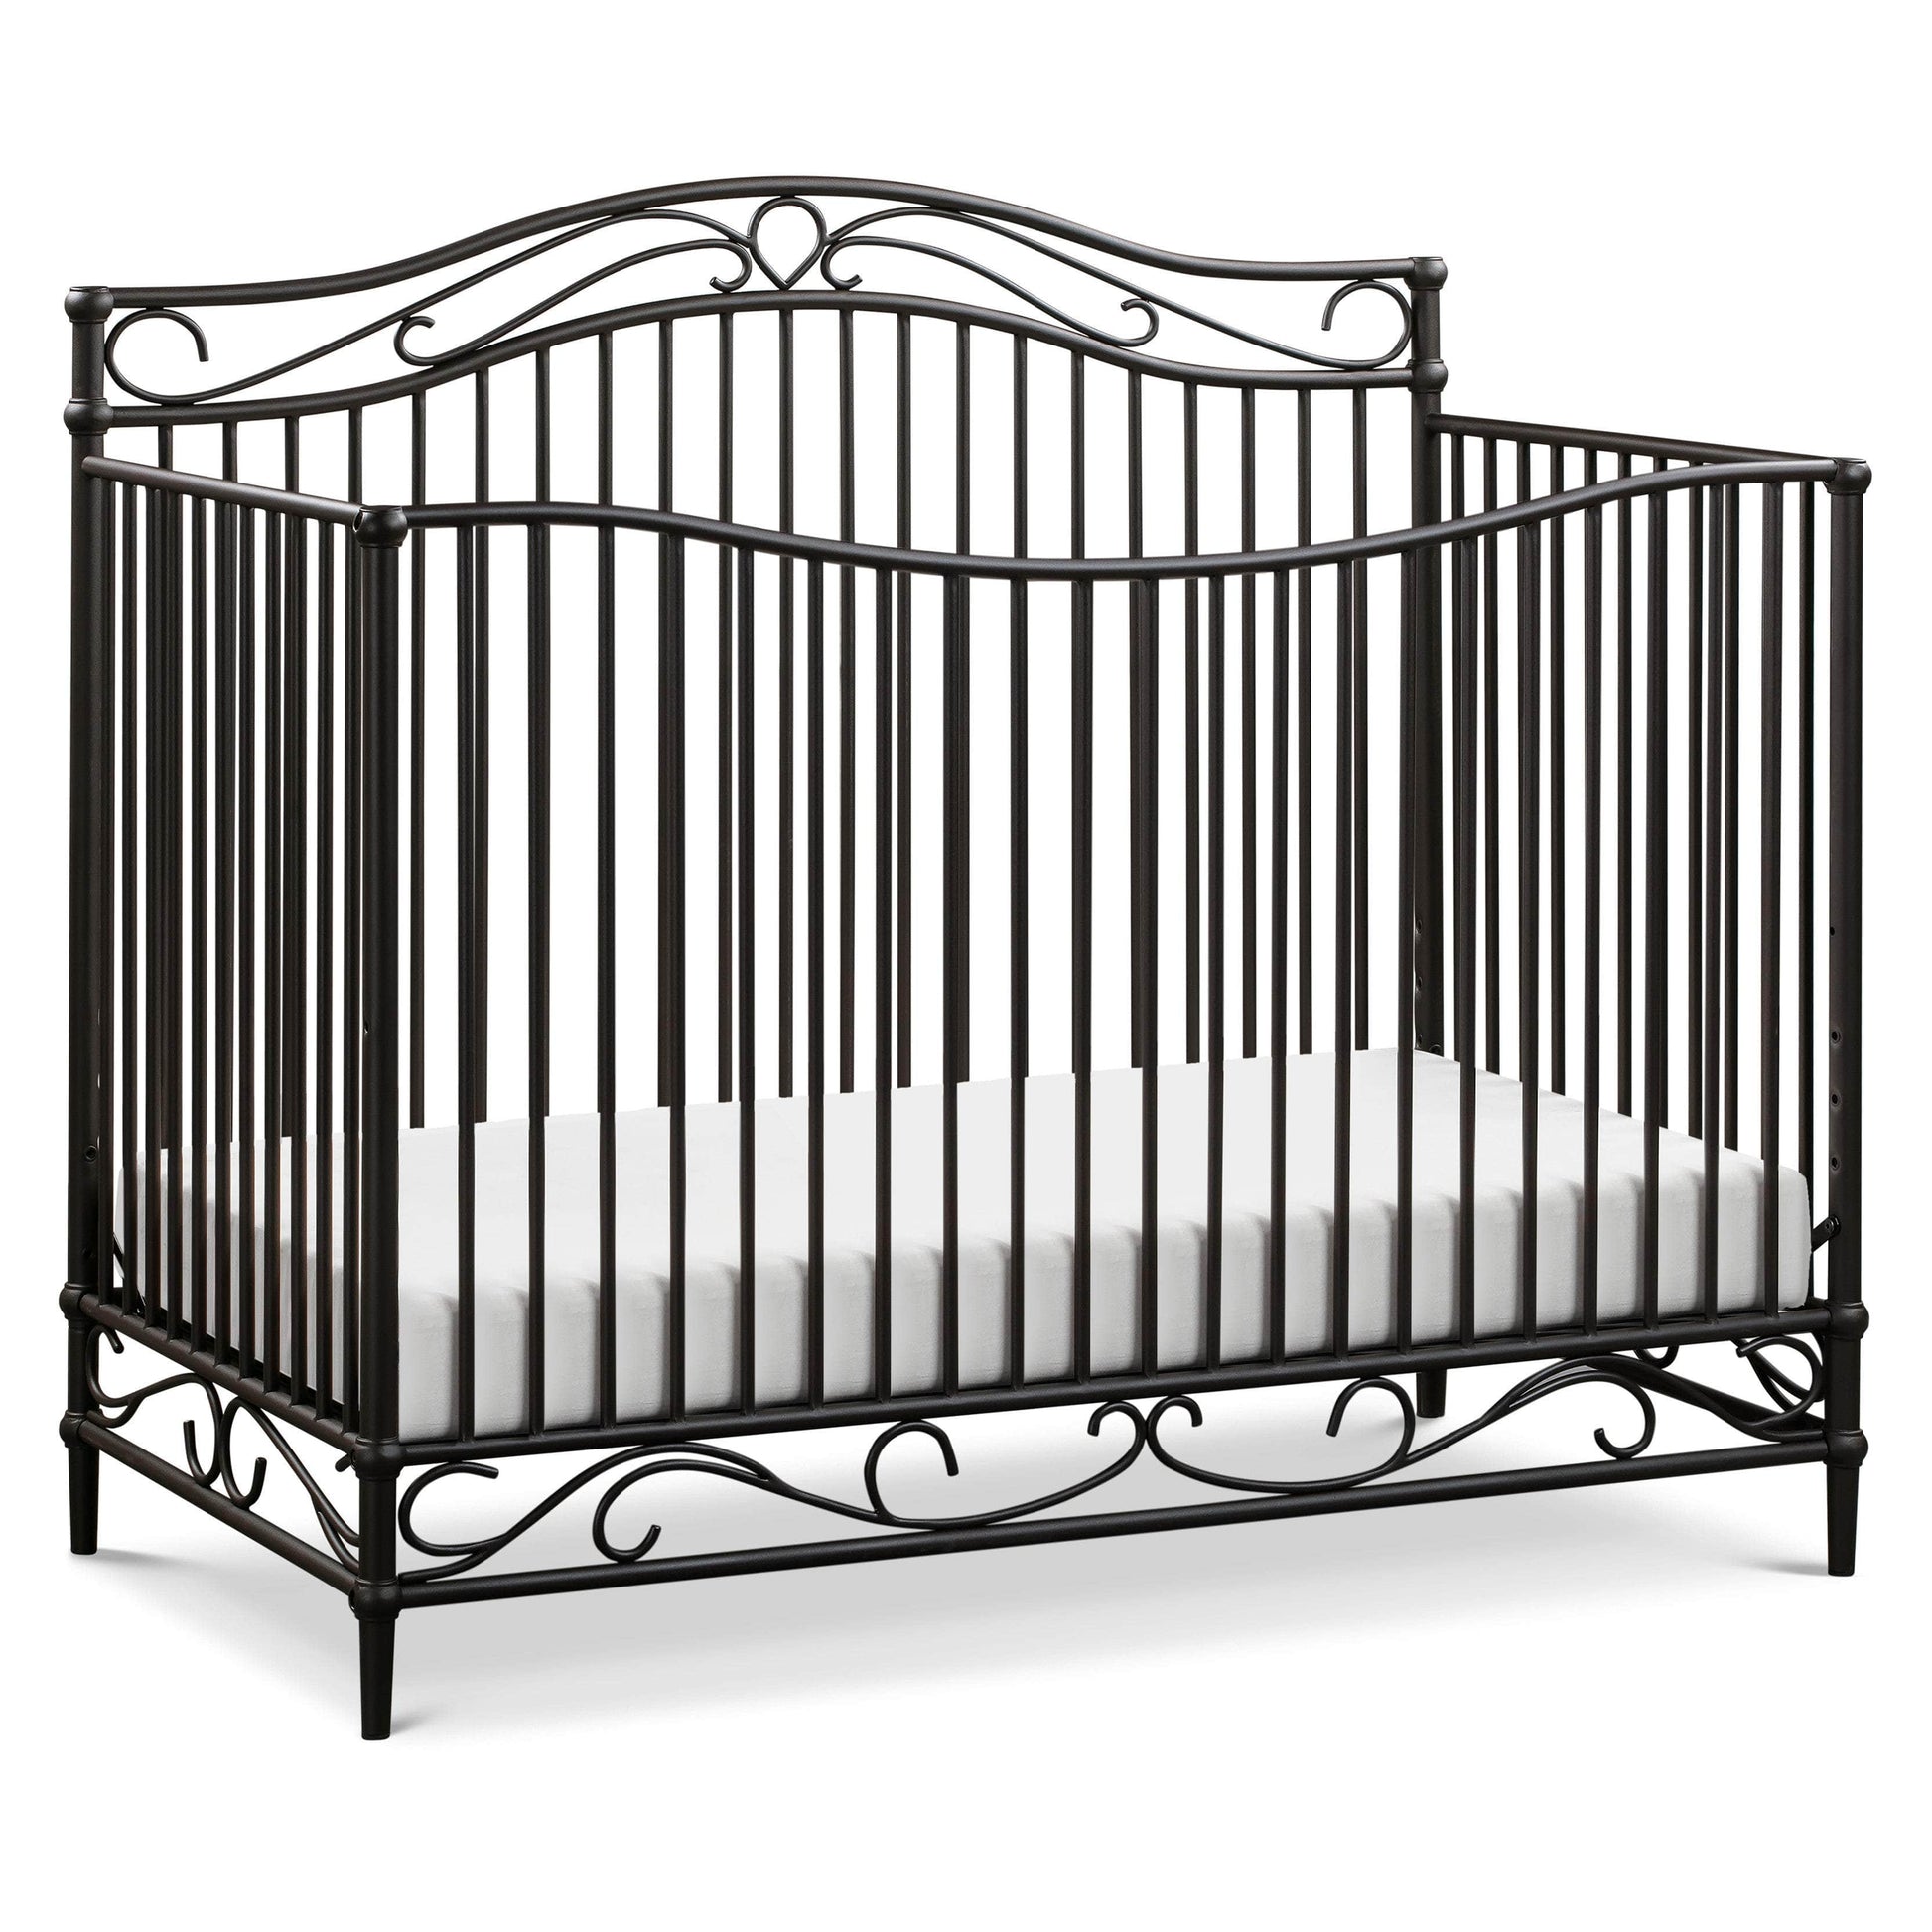 M21501UR,Noelle 4-in-1 Convertible Crib in Vintage Iron